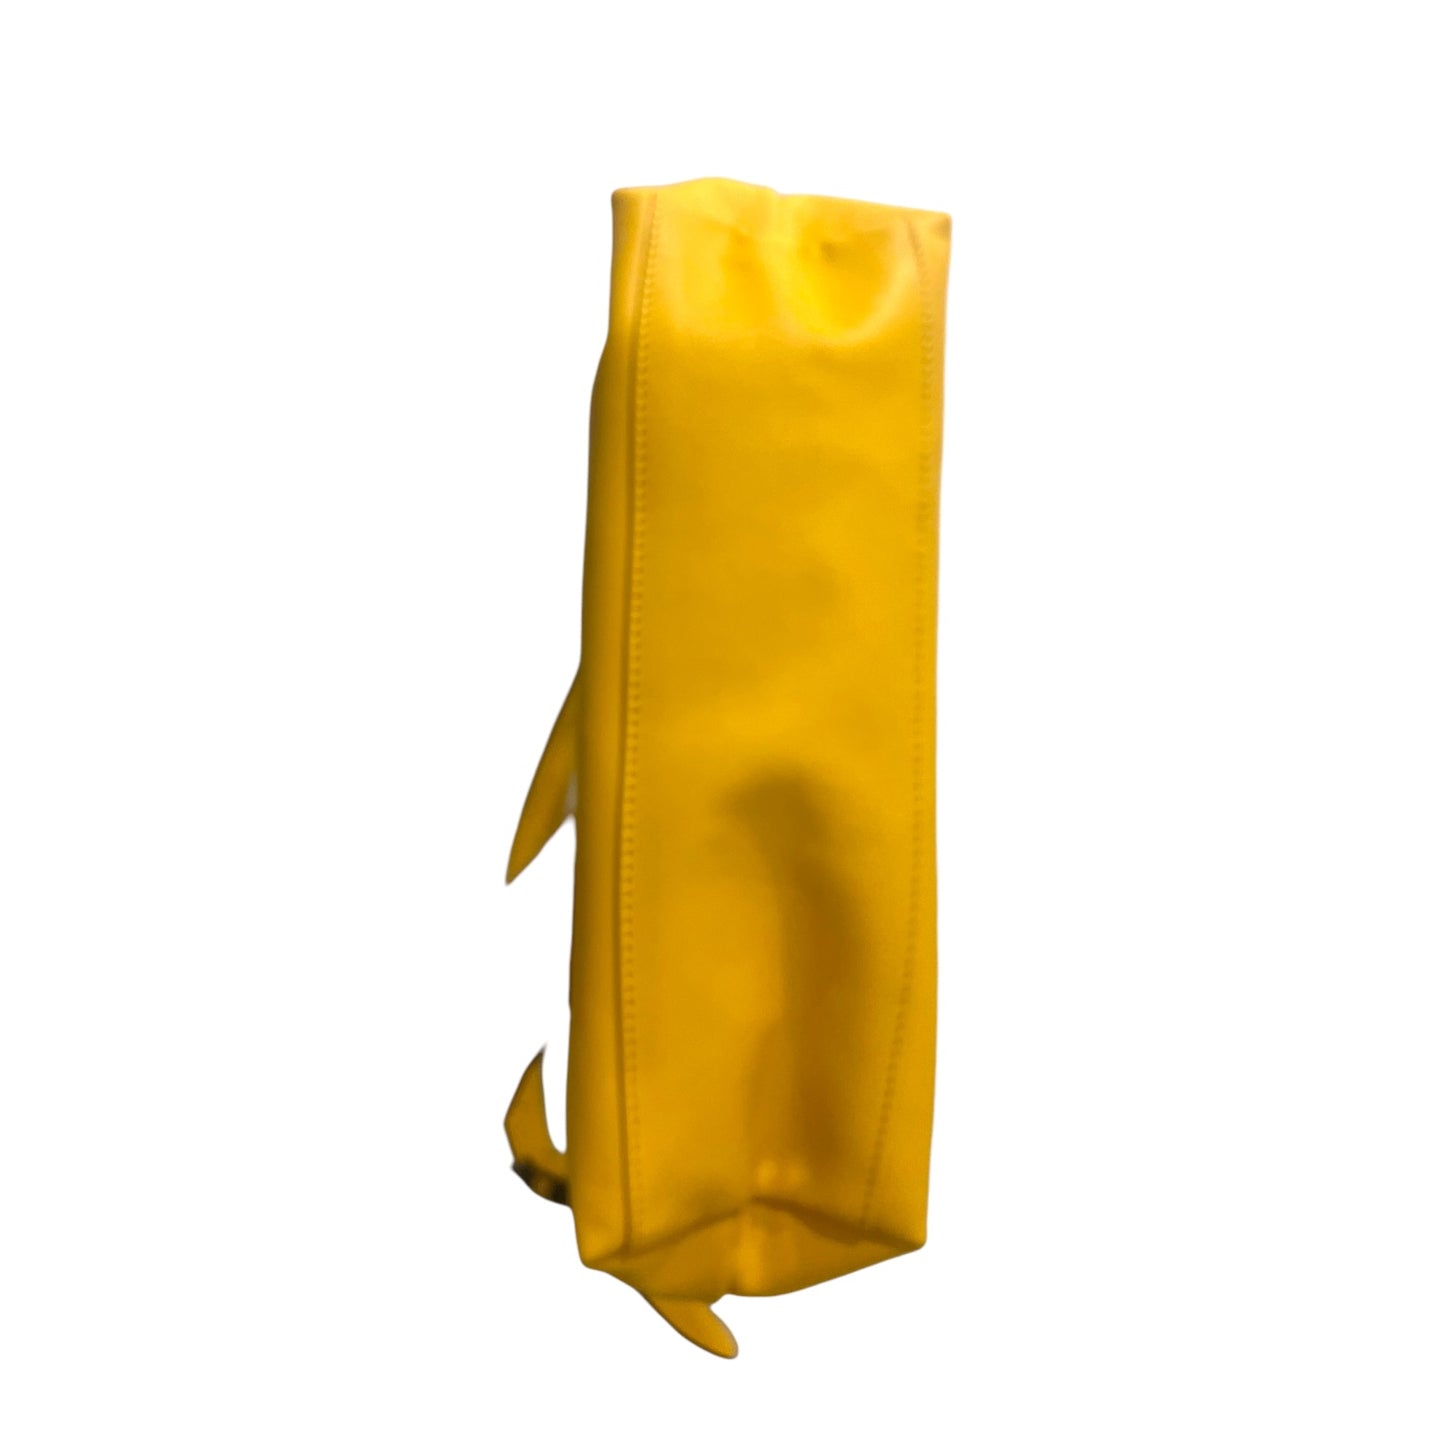 Longchamp Mustard Bag - NEW